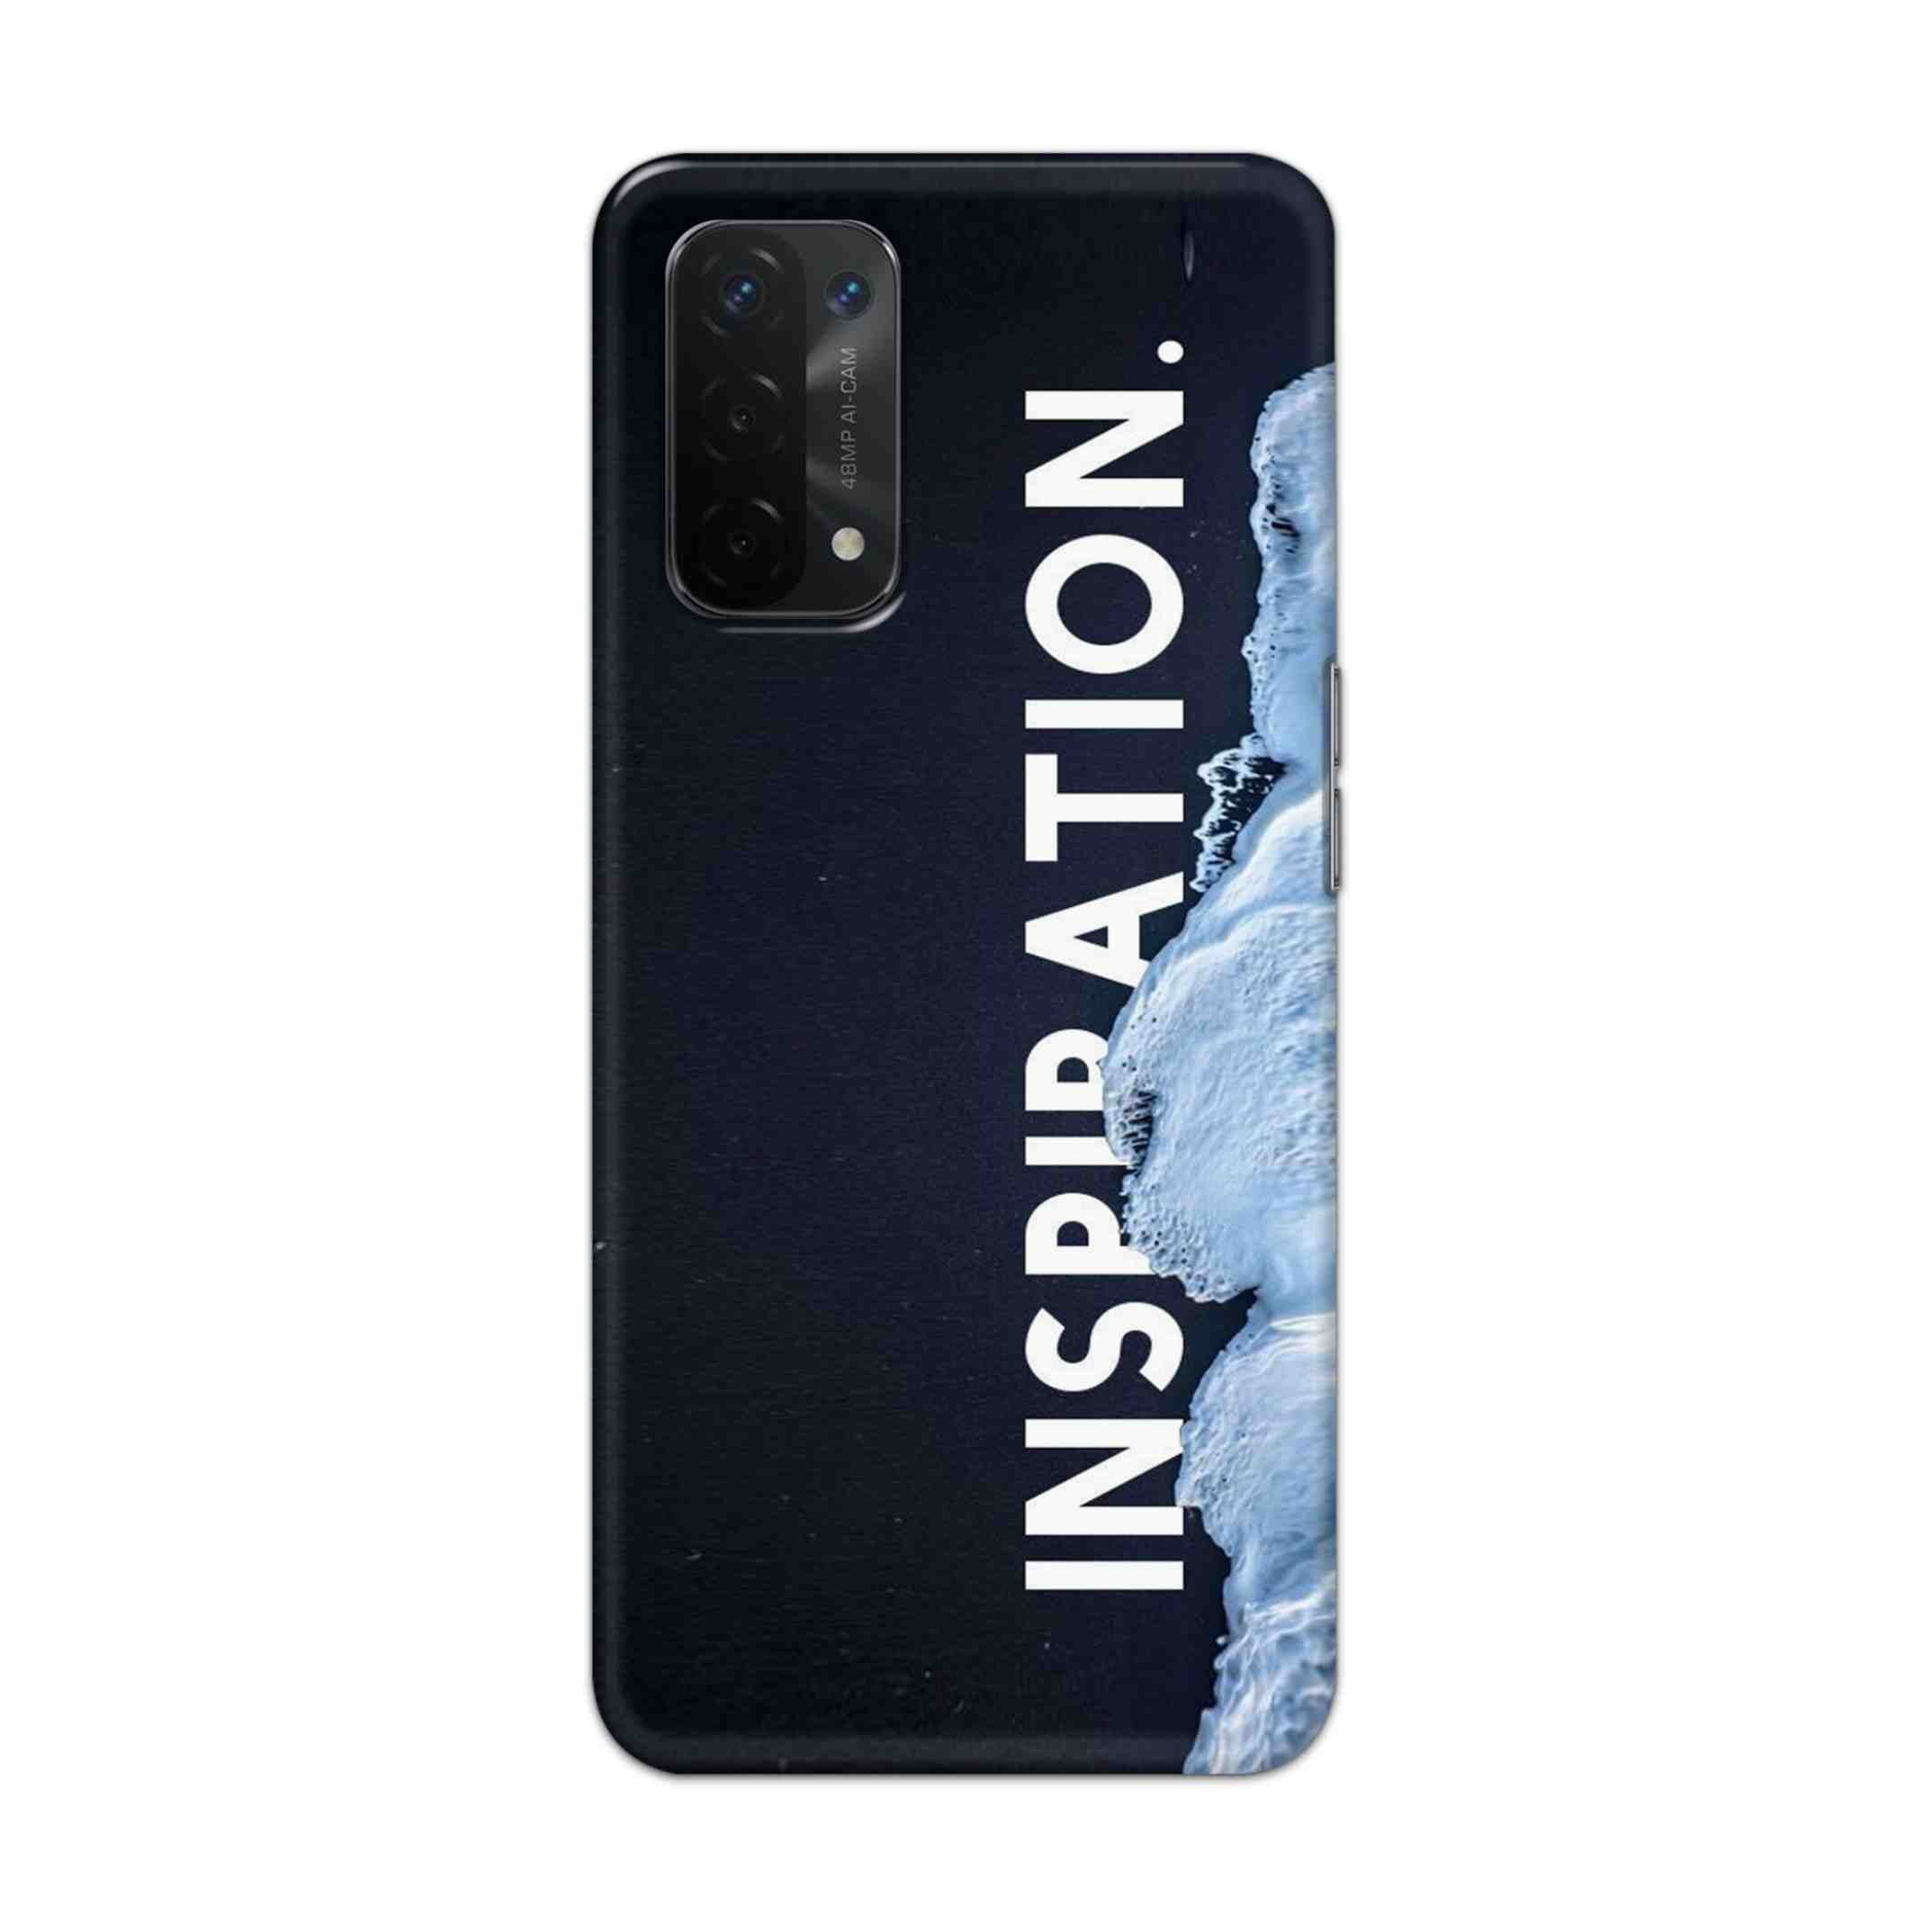 Buy Inspiration Hard Back Mobile Phone Case Cover For Oppo A54 5G Online